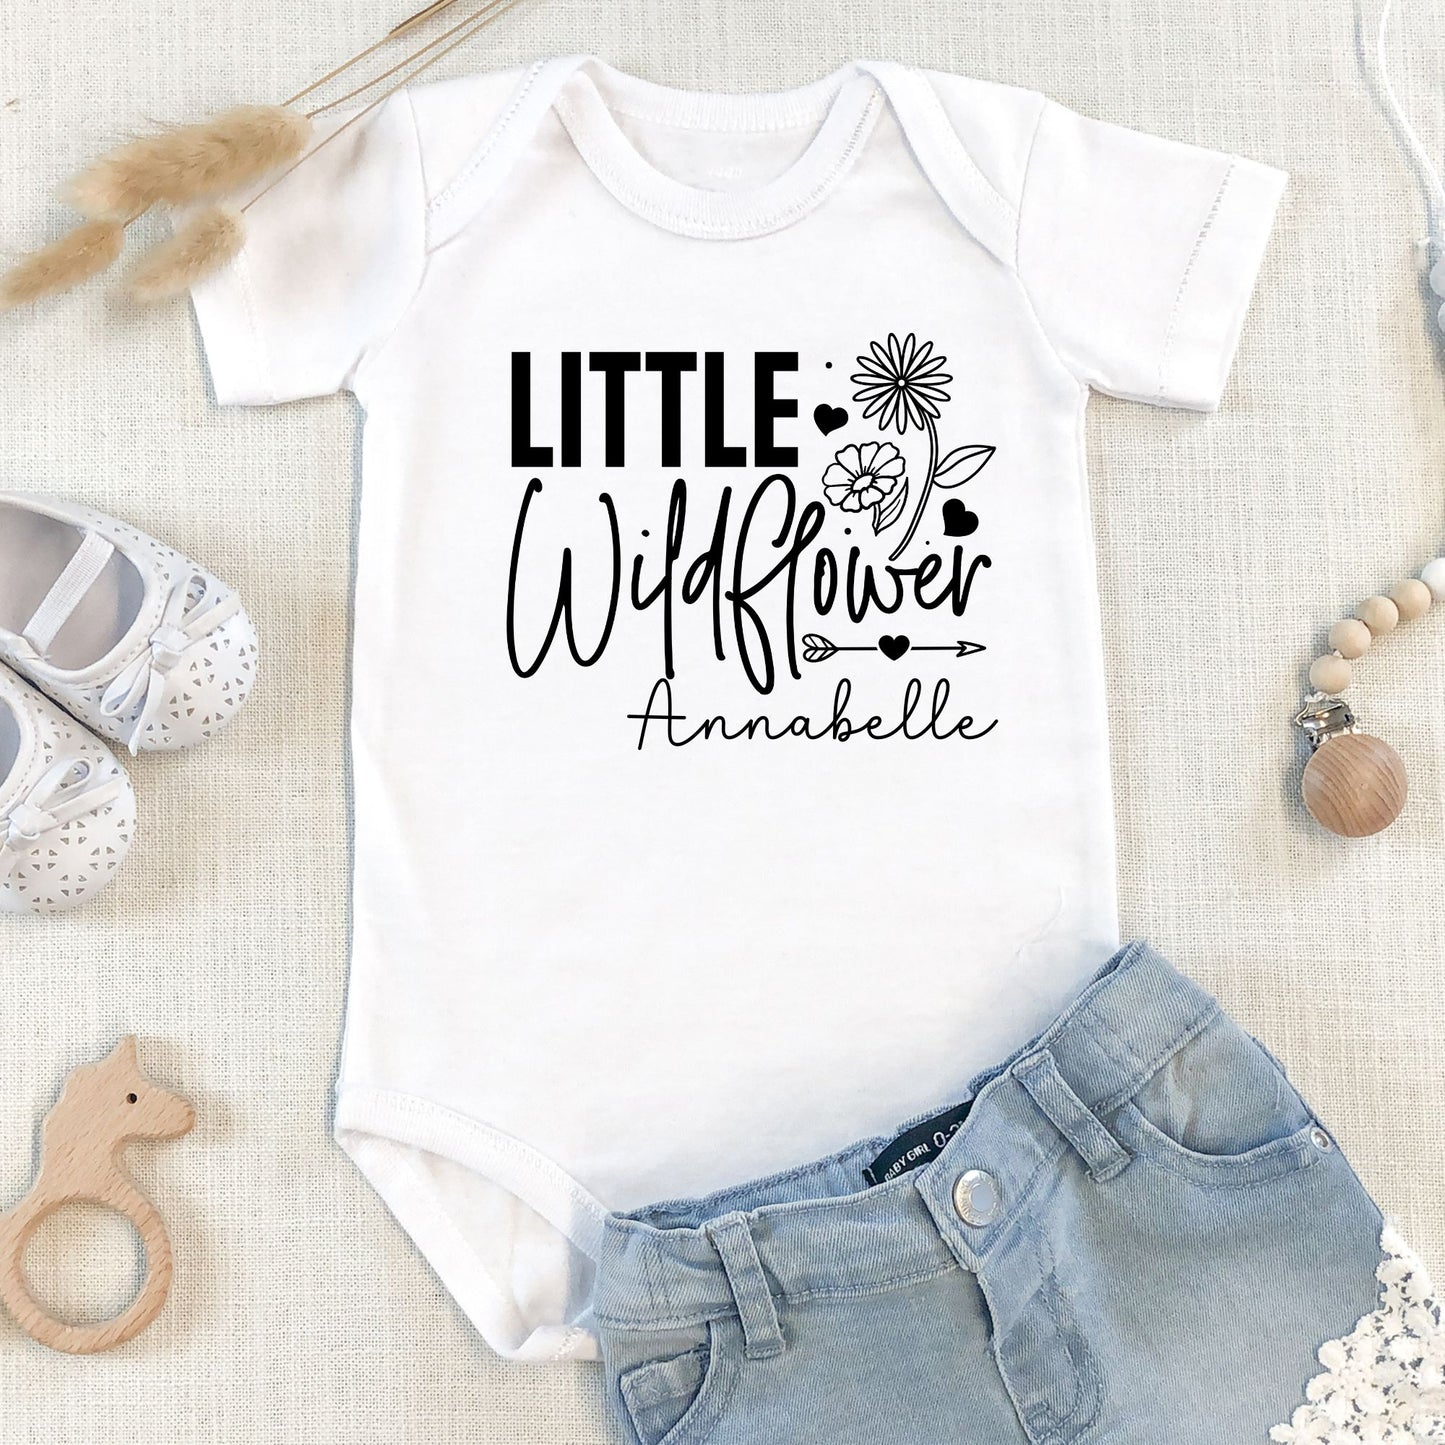 Personalized "Little Wild Flower" Baby Romper